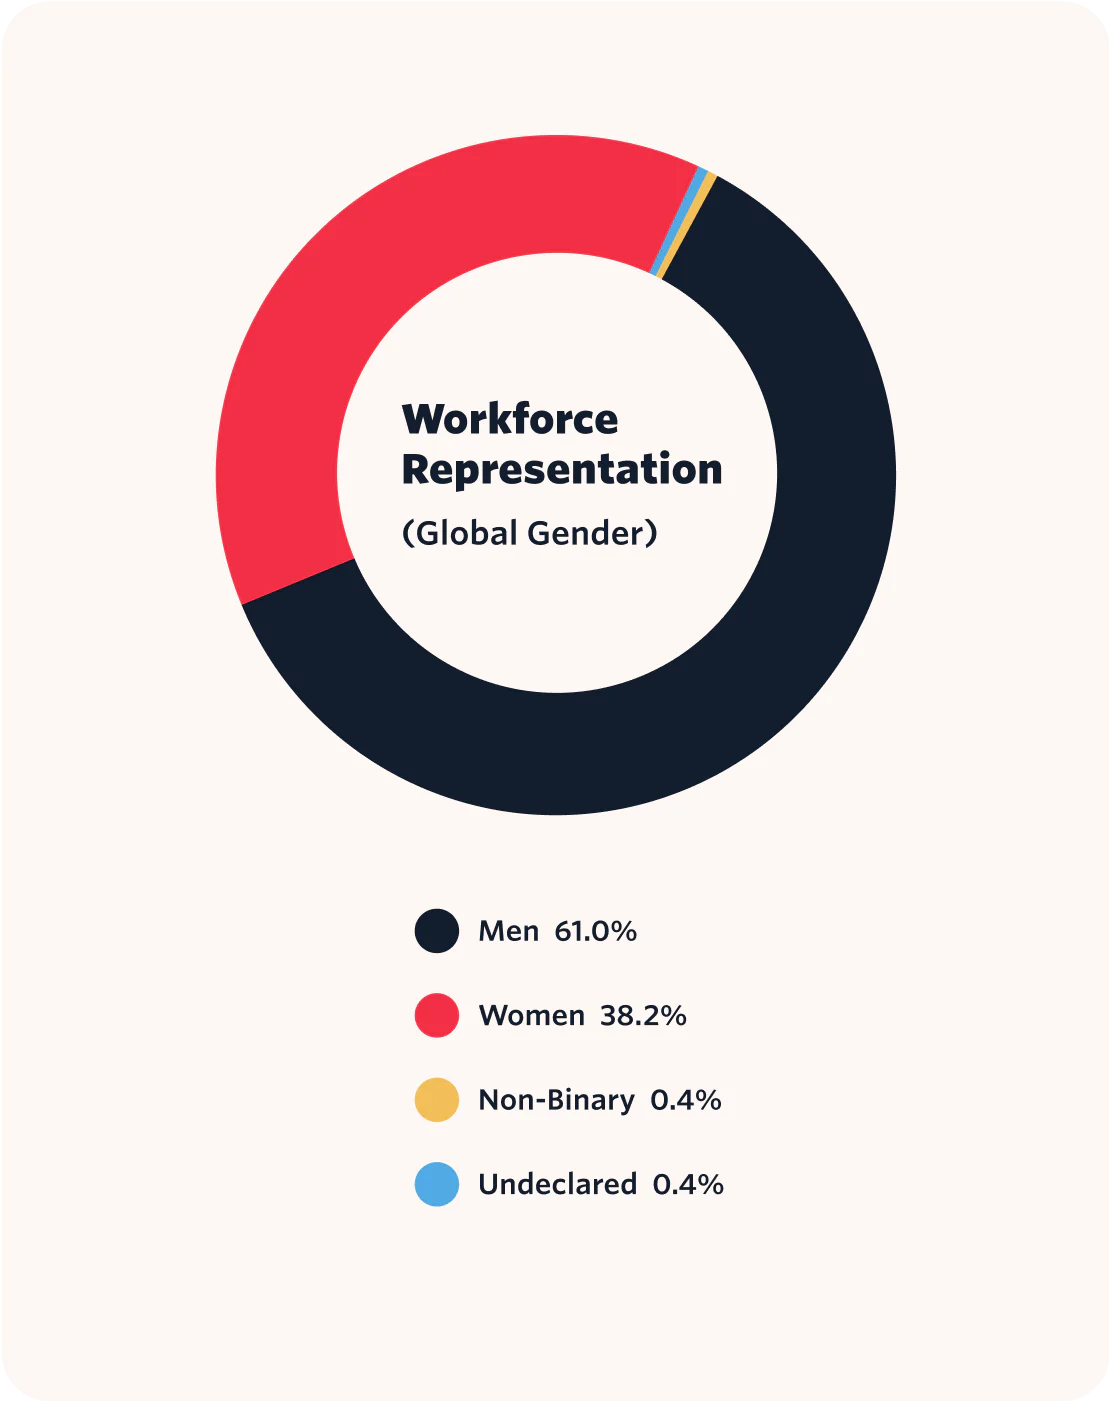 Workforce Representation (Global Gender) data represented in a pie chart.